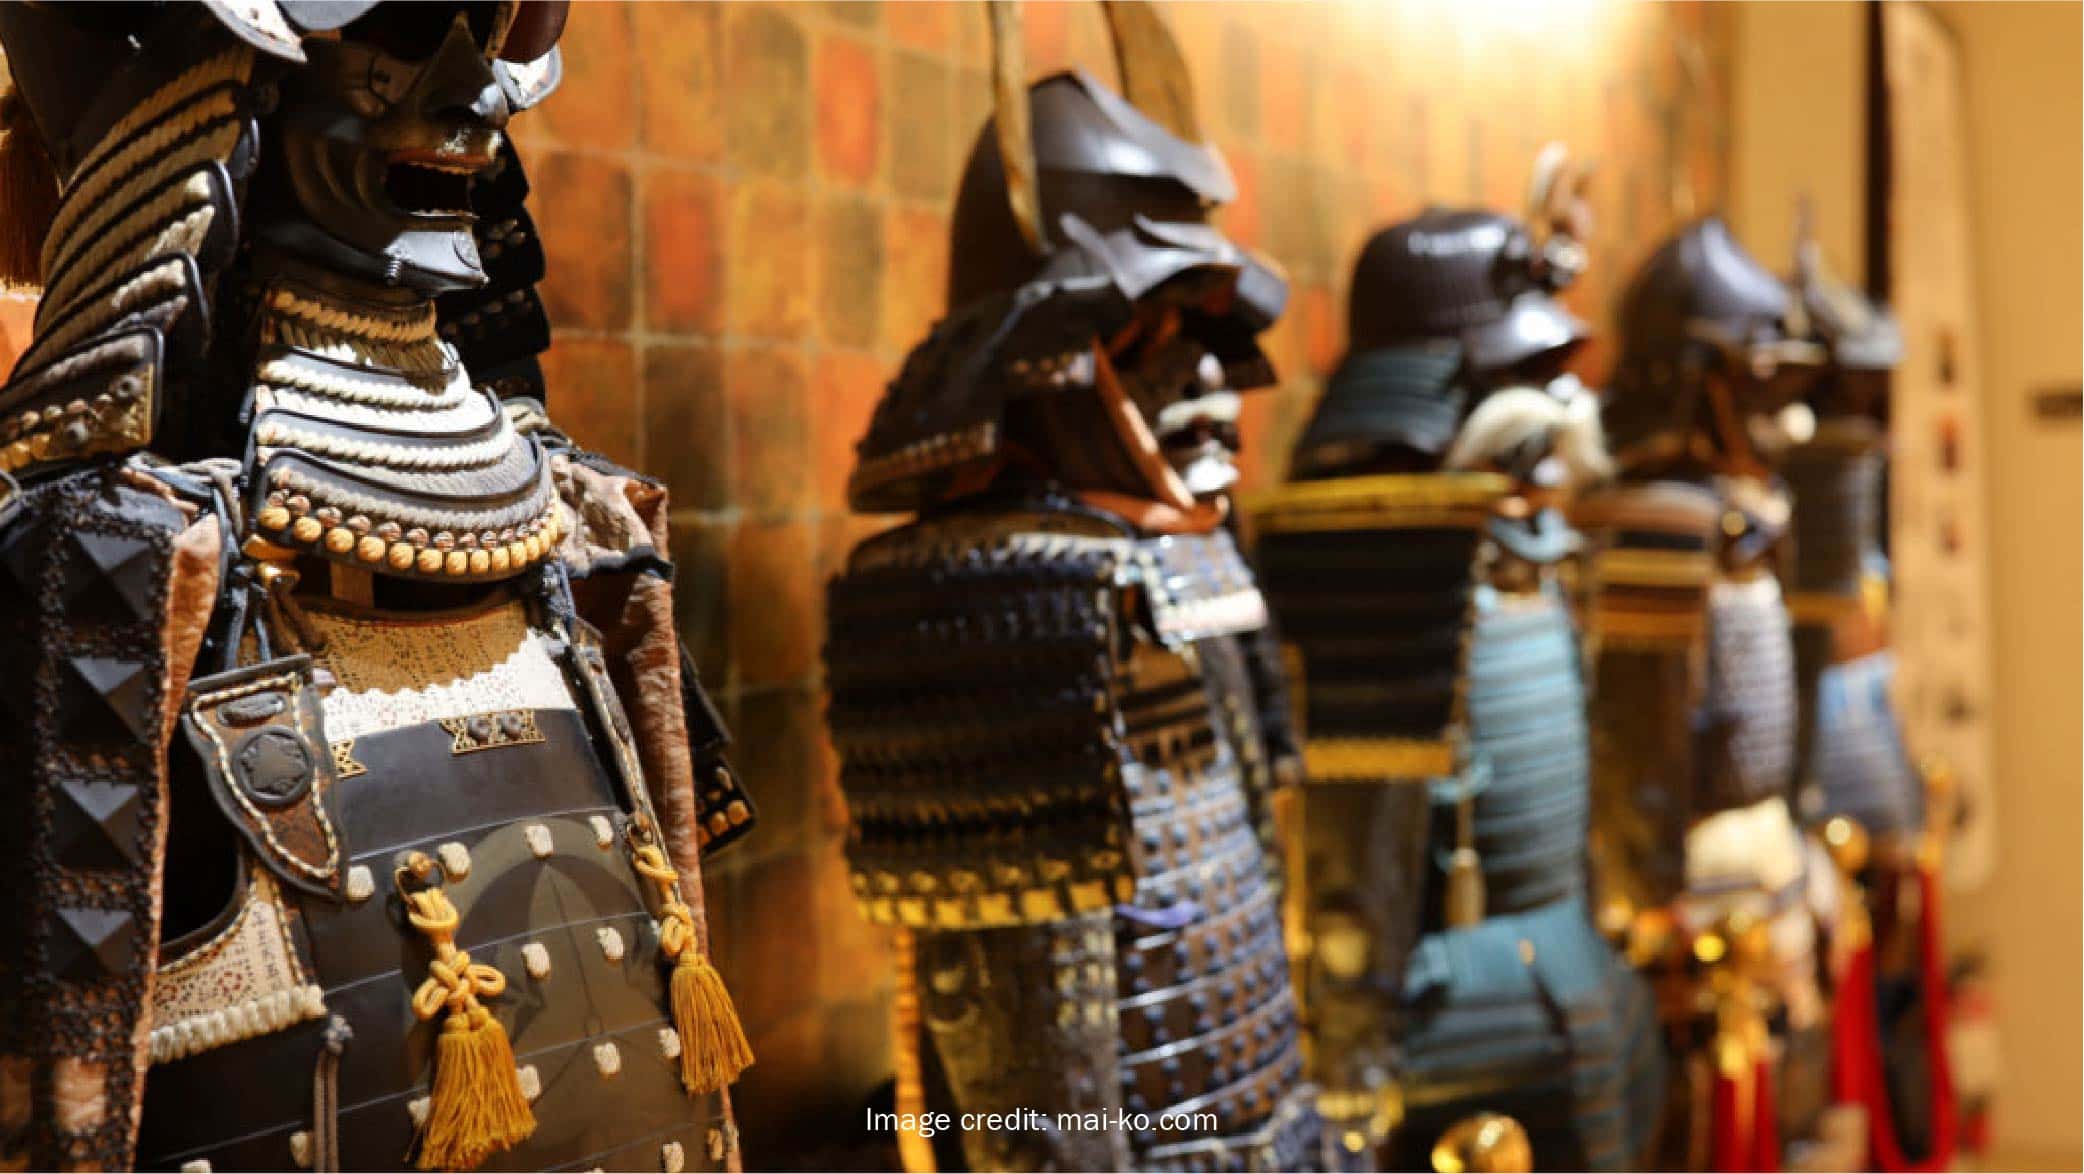 Travelodge Hotels - 10-Day Family Itinerary in Japan - Kyoto Samurai and Ninja Museum